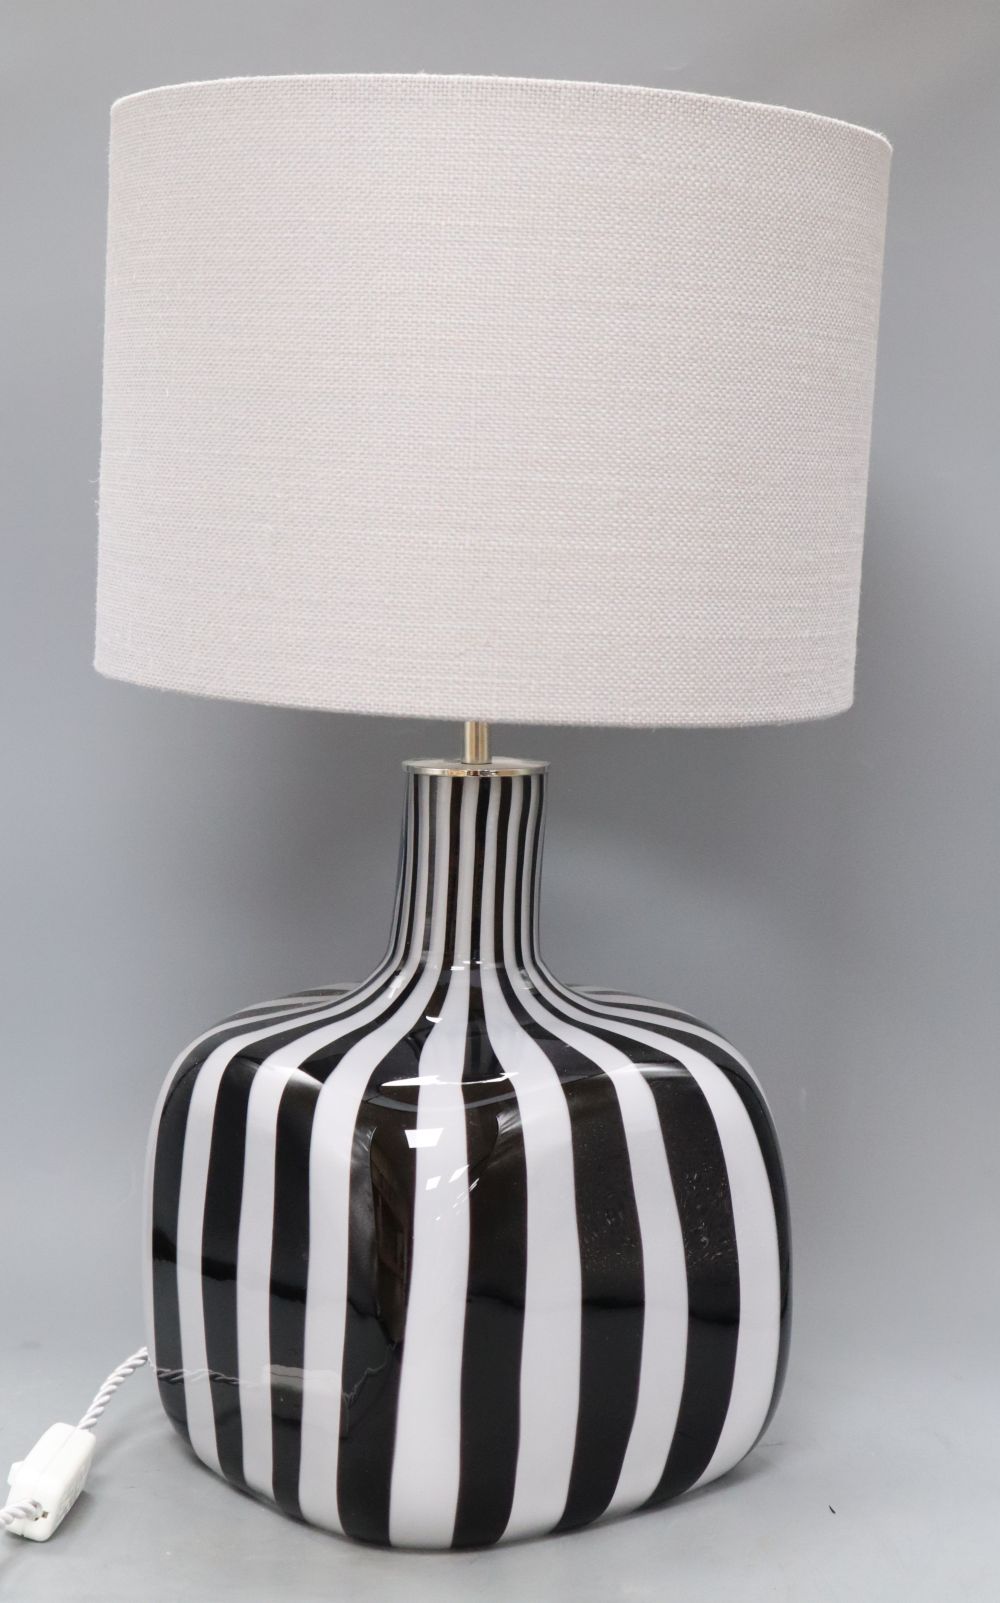 A Porto Romana striped glass table lamp, overall height 53cm